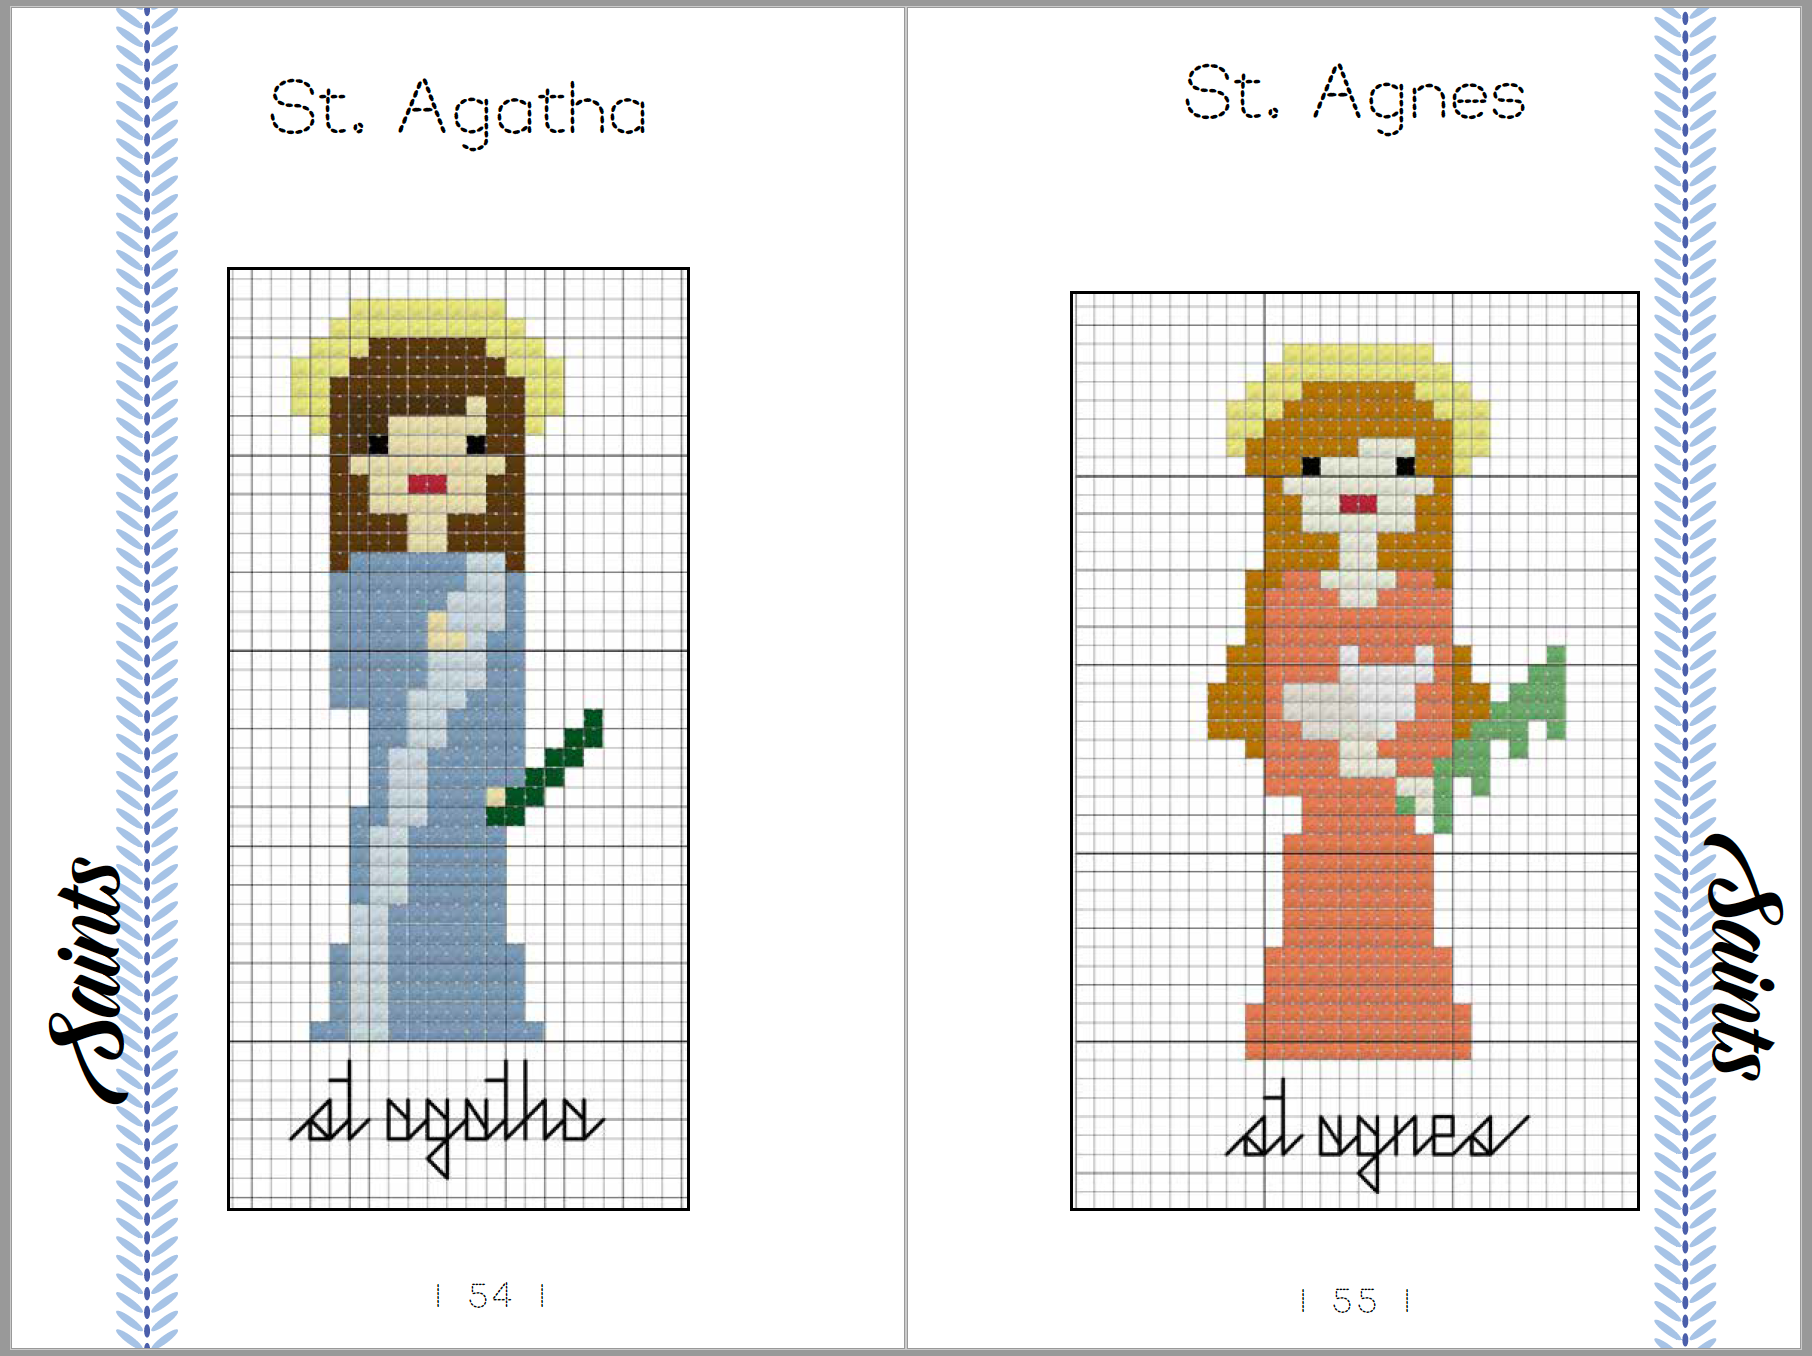 Saints of the Catholic Church in Cross Stitch: Digital Copy